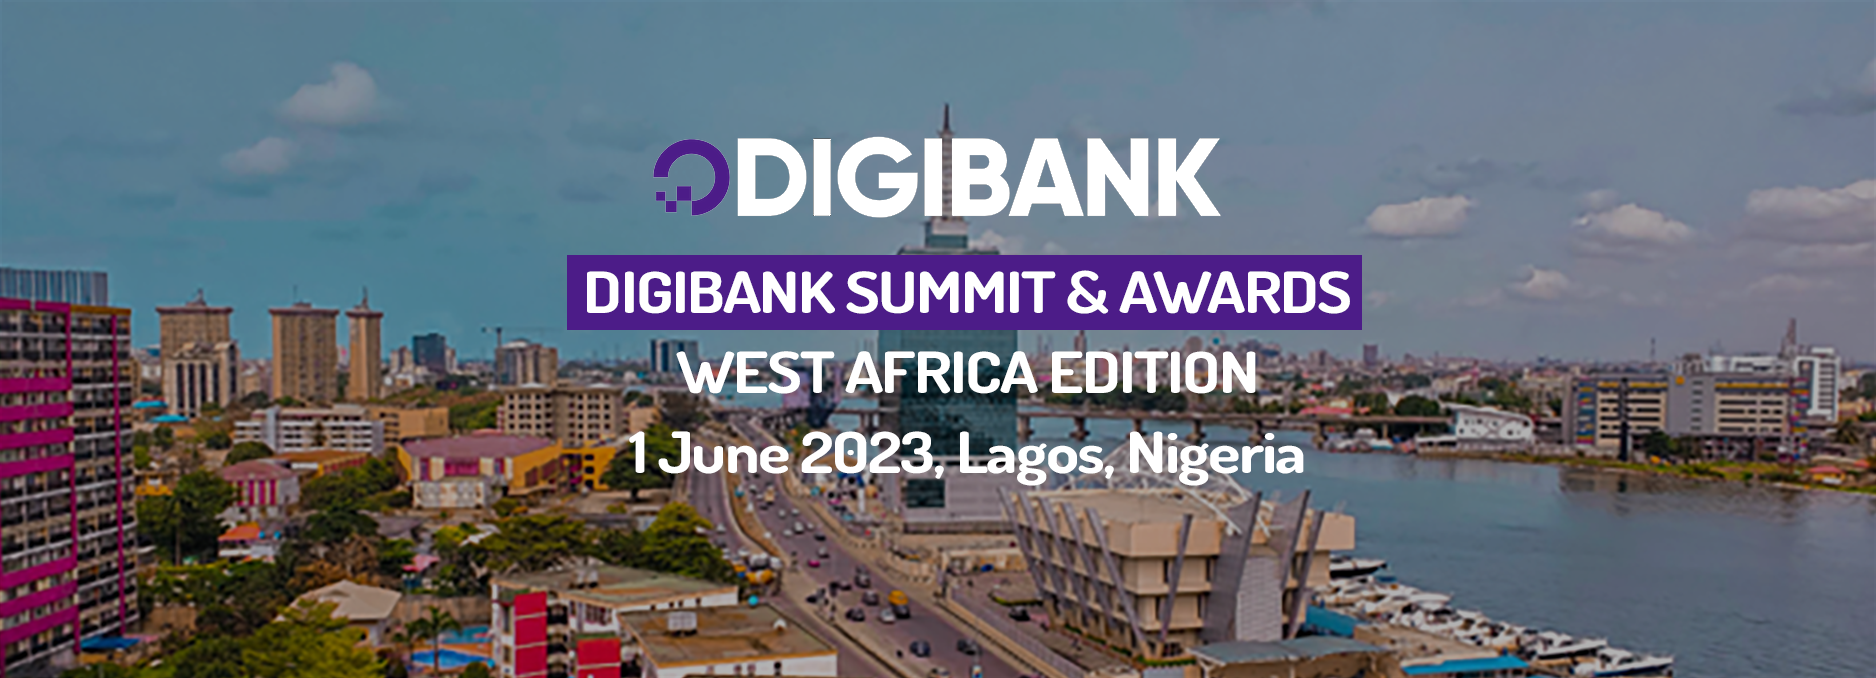 DigiBank Summit & Awards West Africa, Lagos, Nigeria